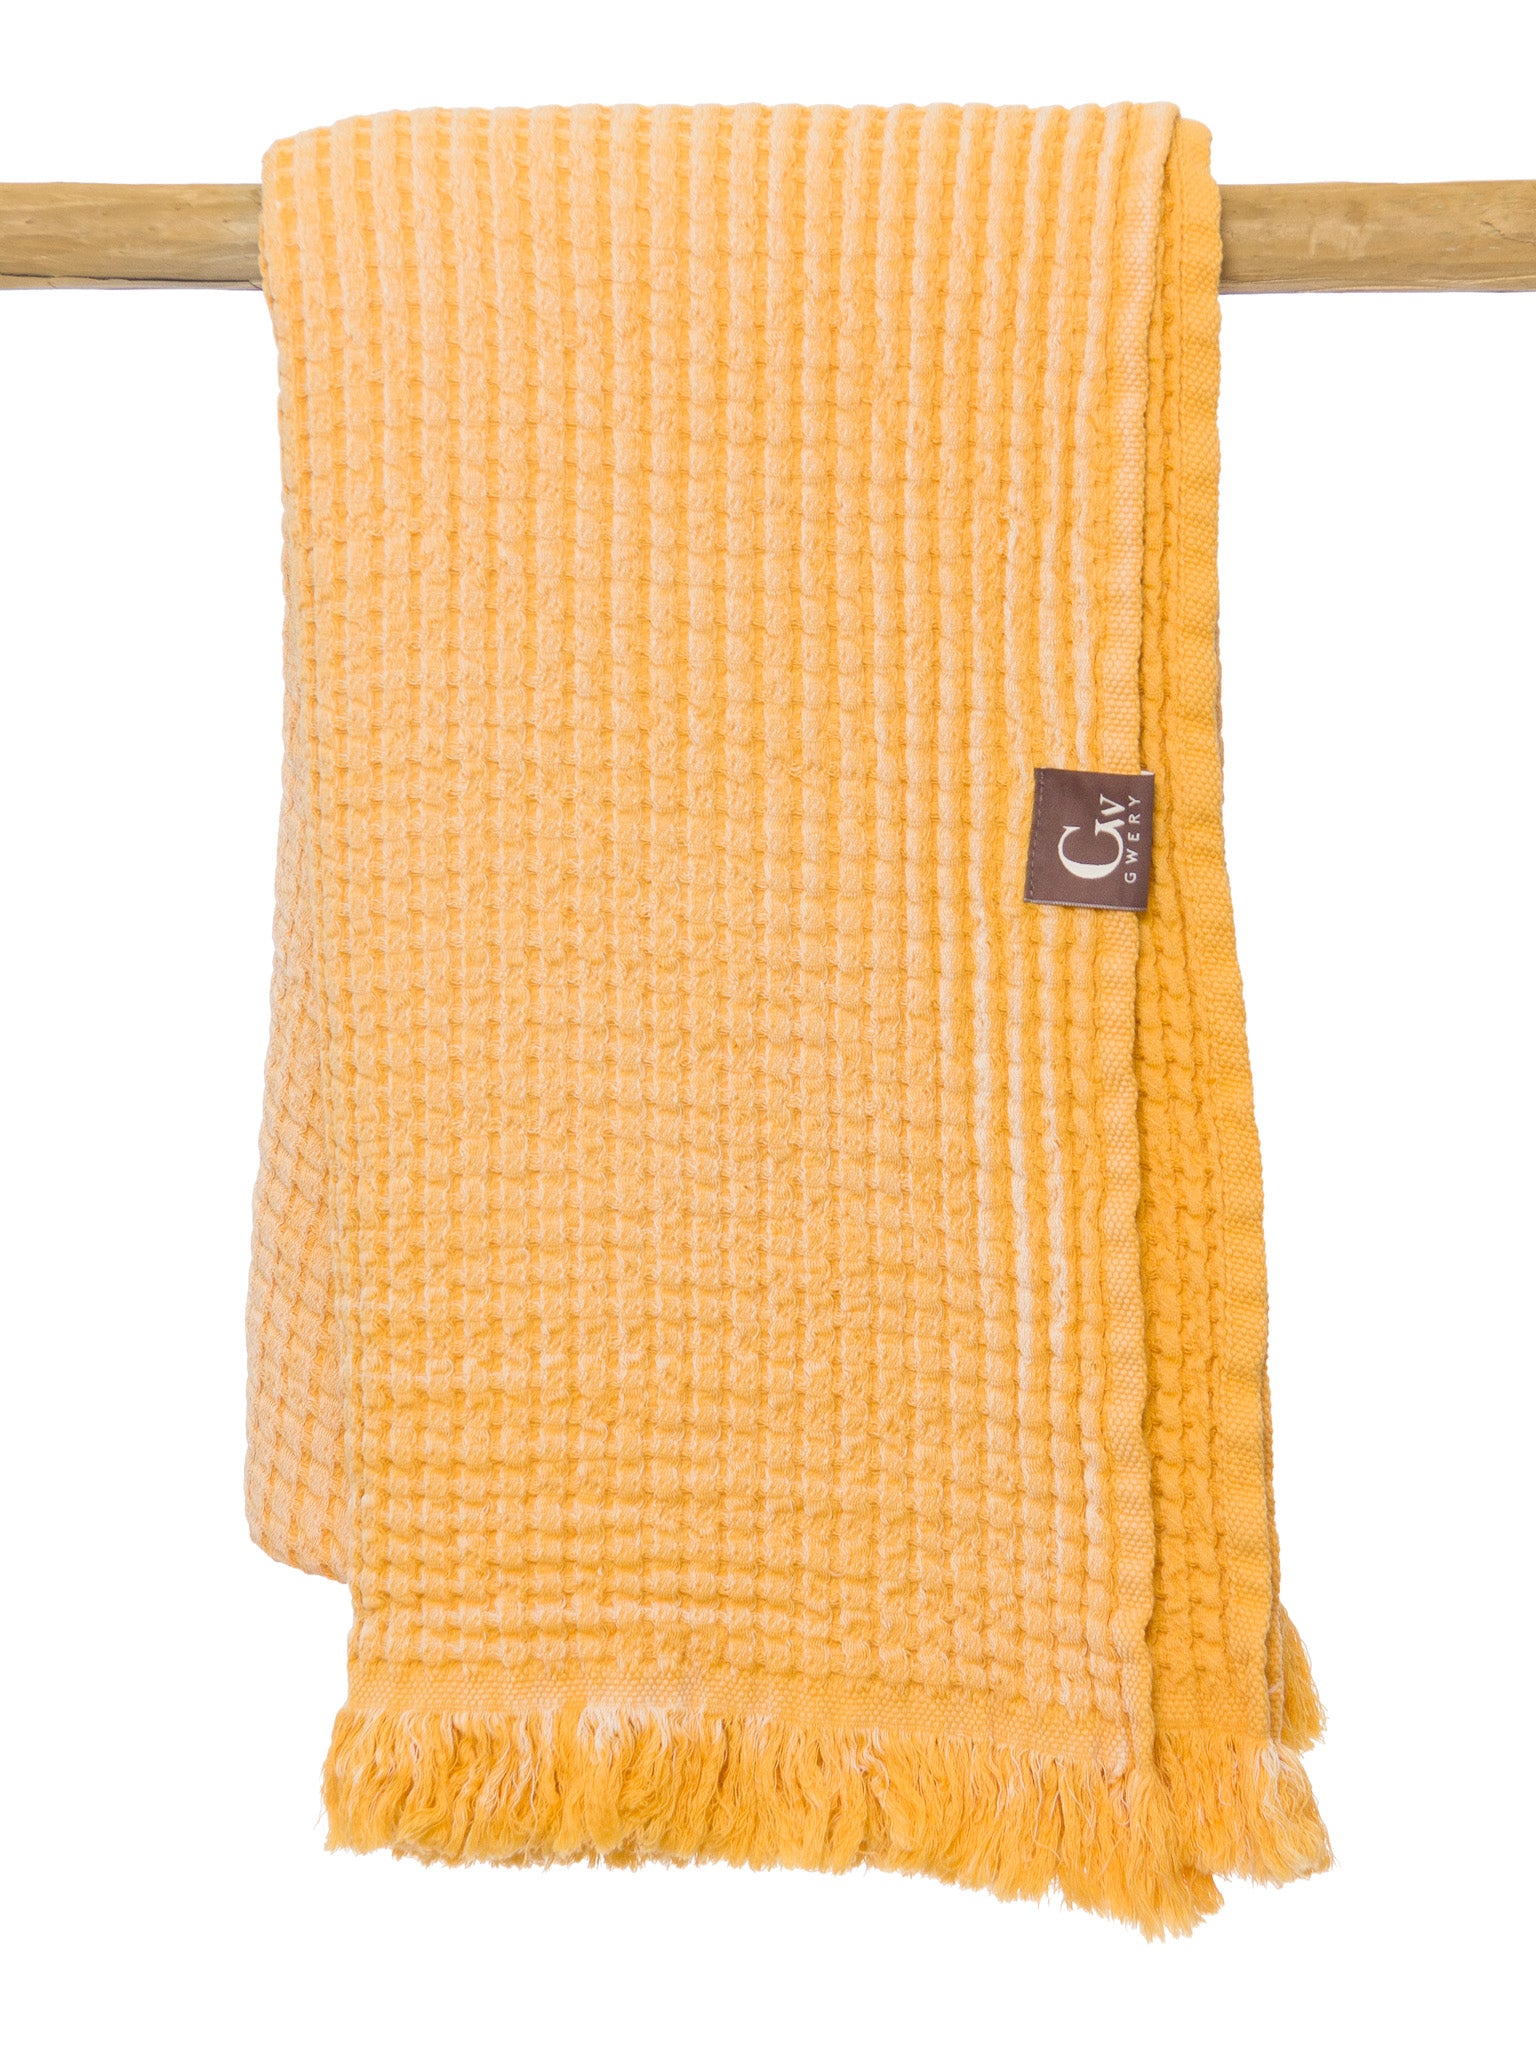 Yellow double sided honeycomb beach towel folded